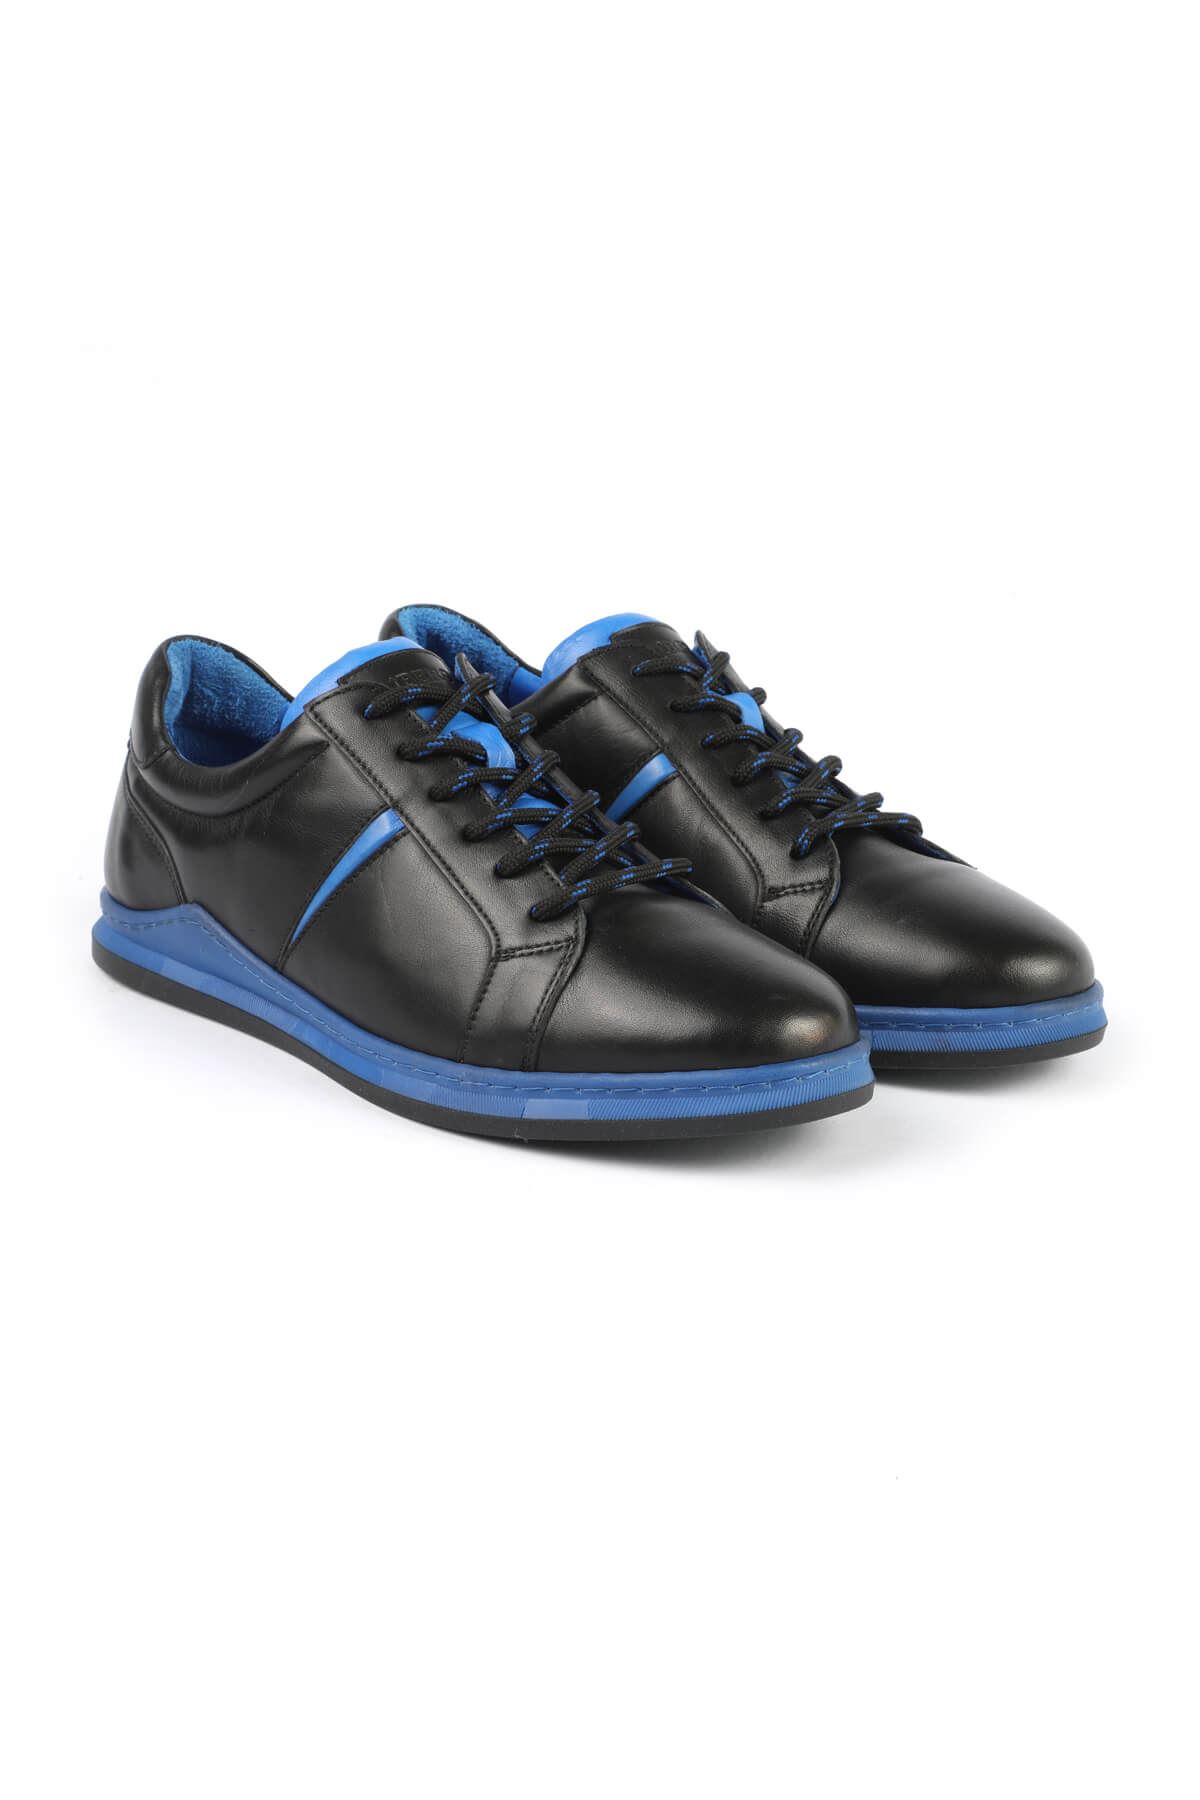 Libero 3196 Black Blue Sneaker Shoes